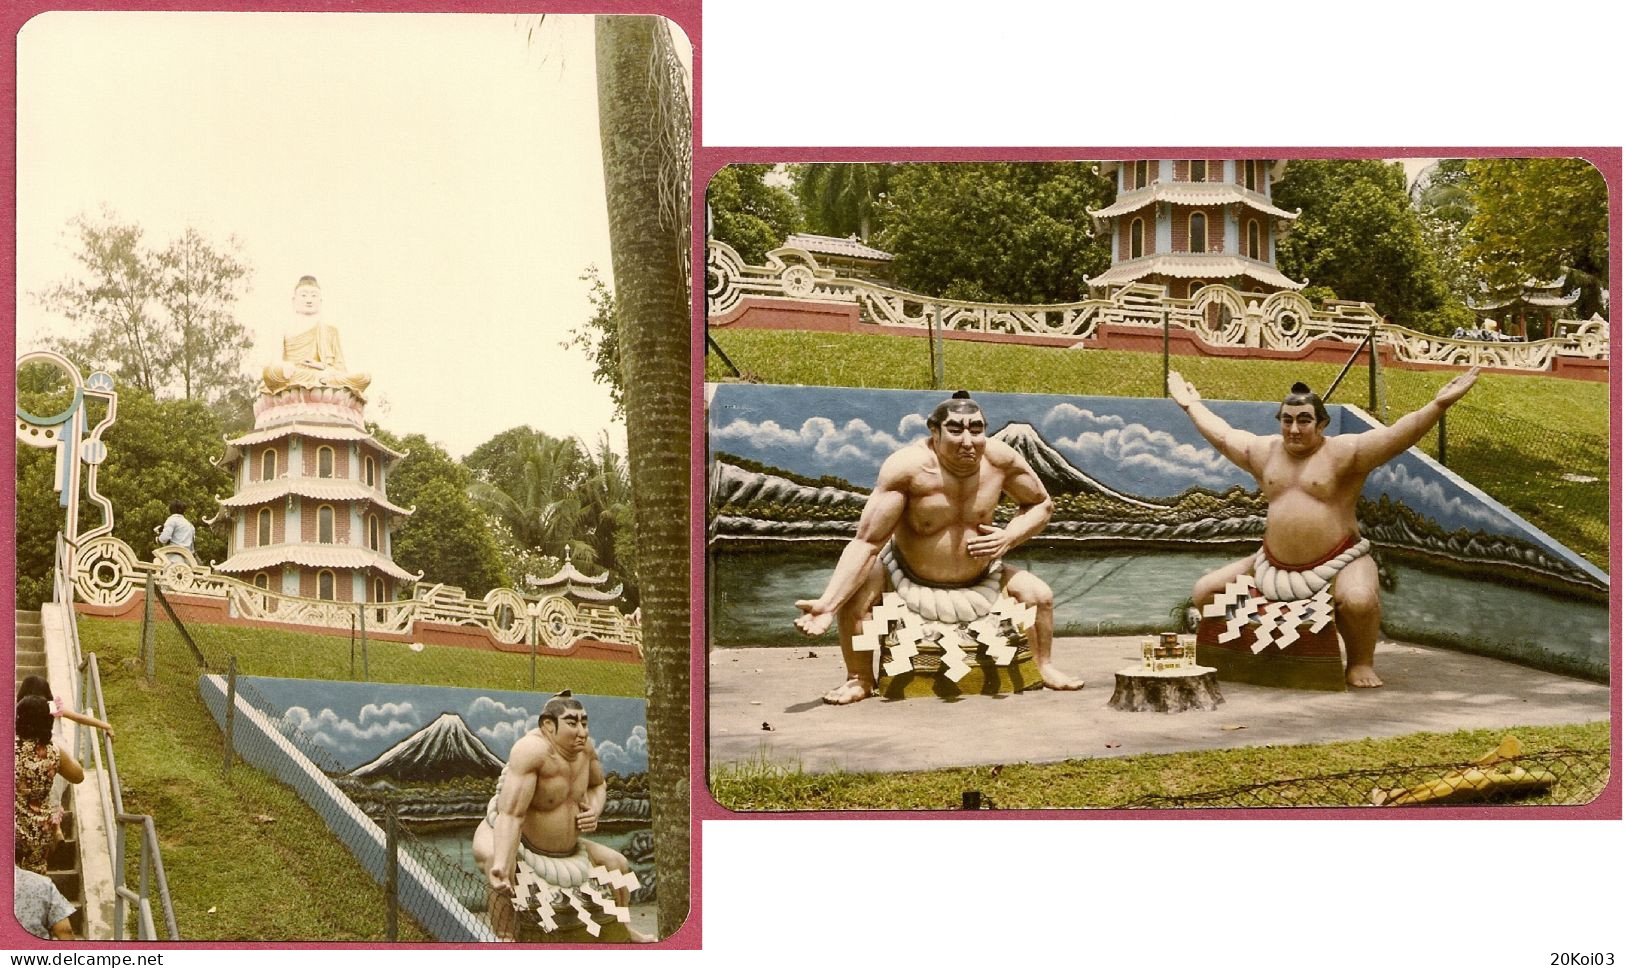 Singapore Haw Par Villa, SUMO Japan, Pagoda Buddha Statue, Tiger Balm Garden_UNC_Vintage Photo 1975's +/-Kodac CPSM_cpc - Singapur